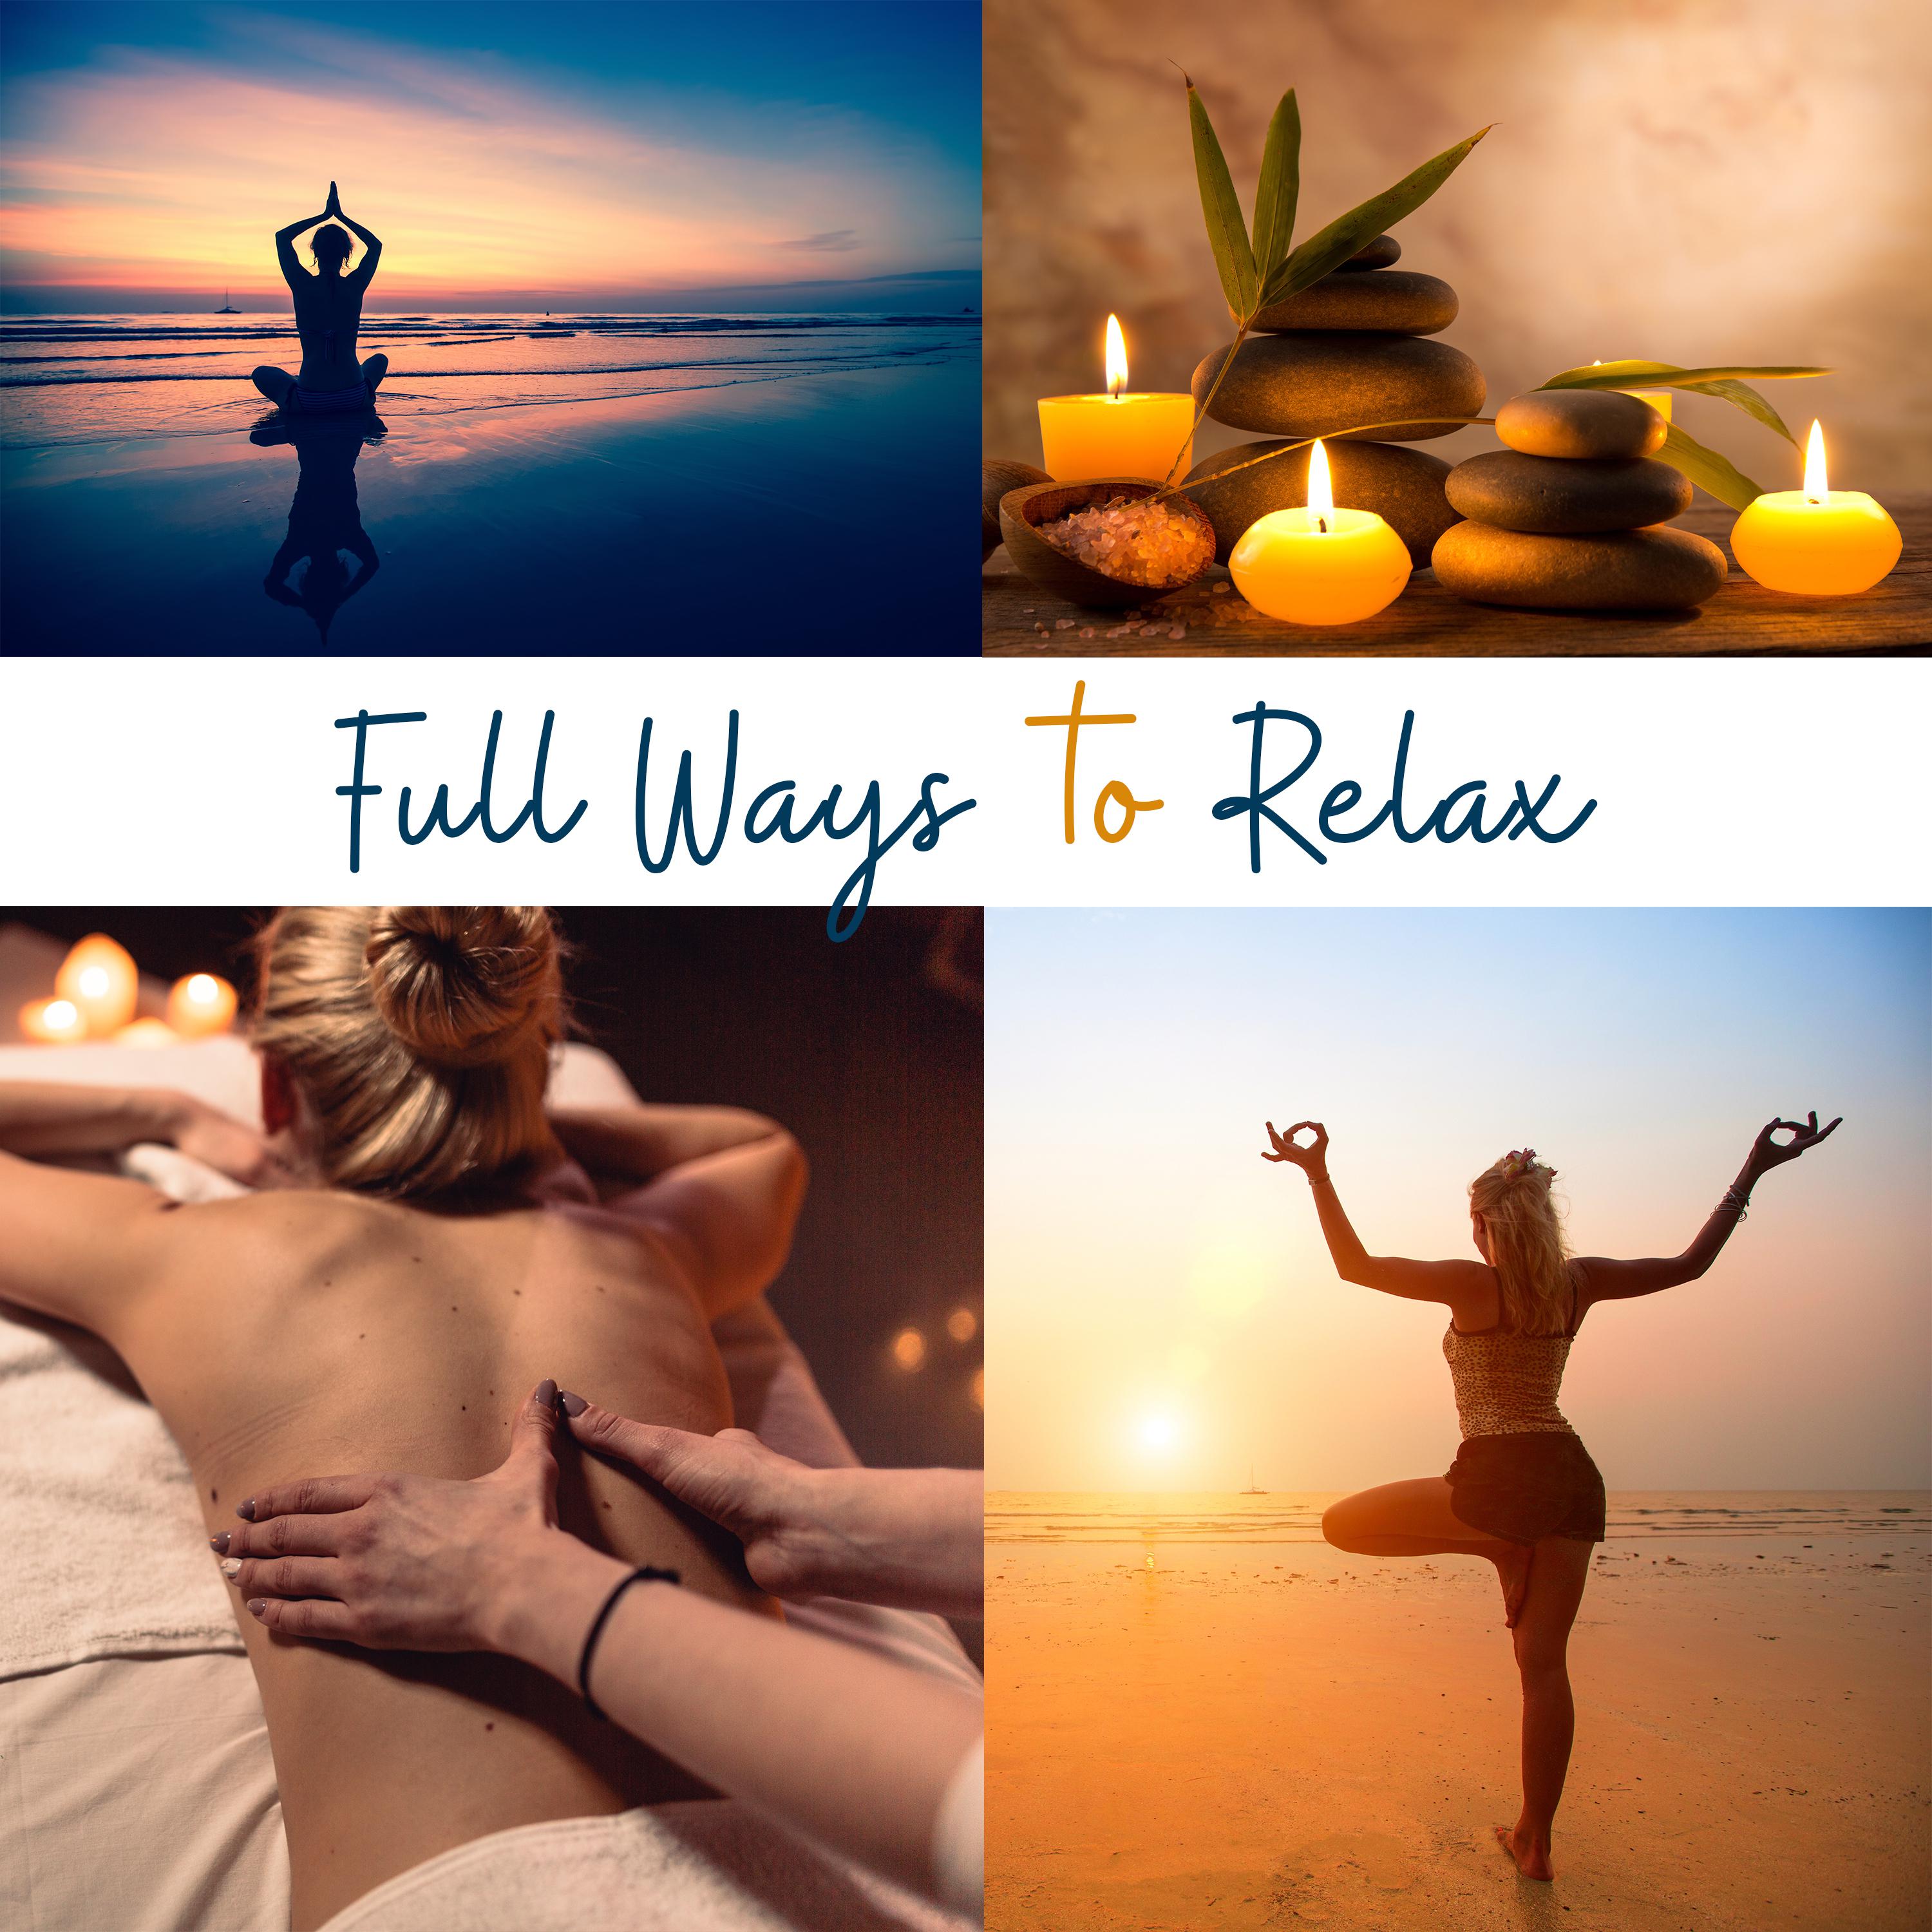 Full Ways to Relax